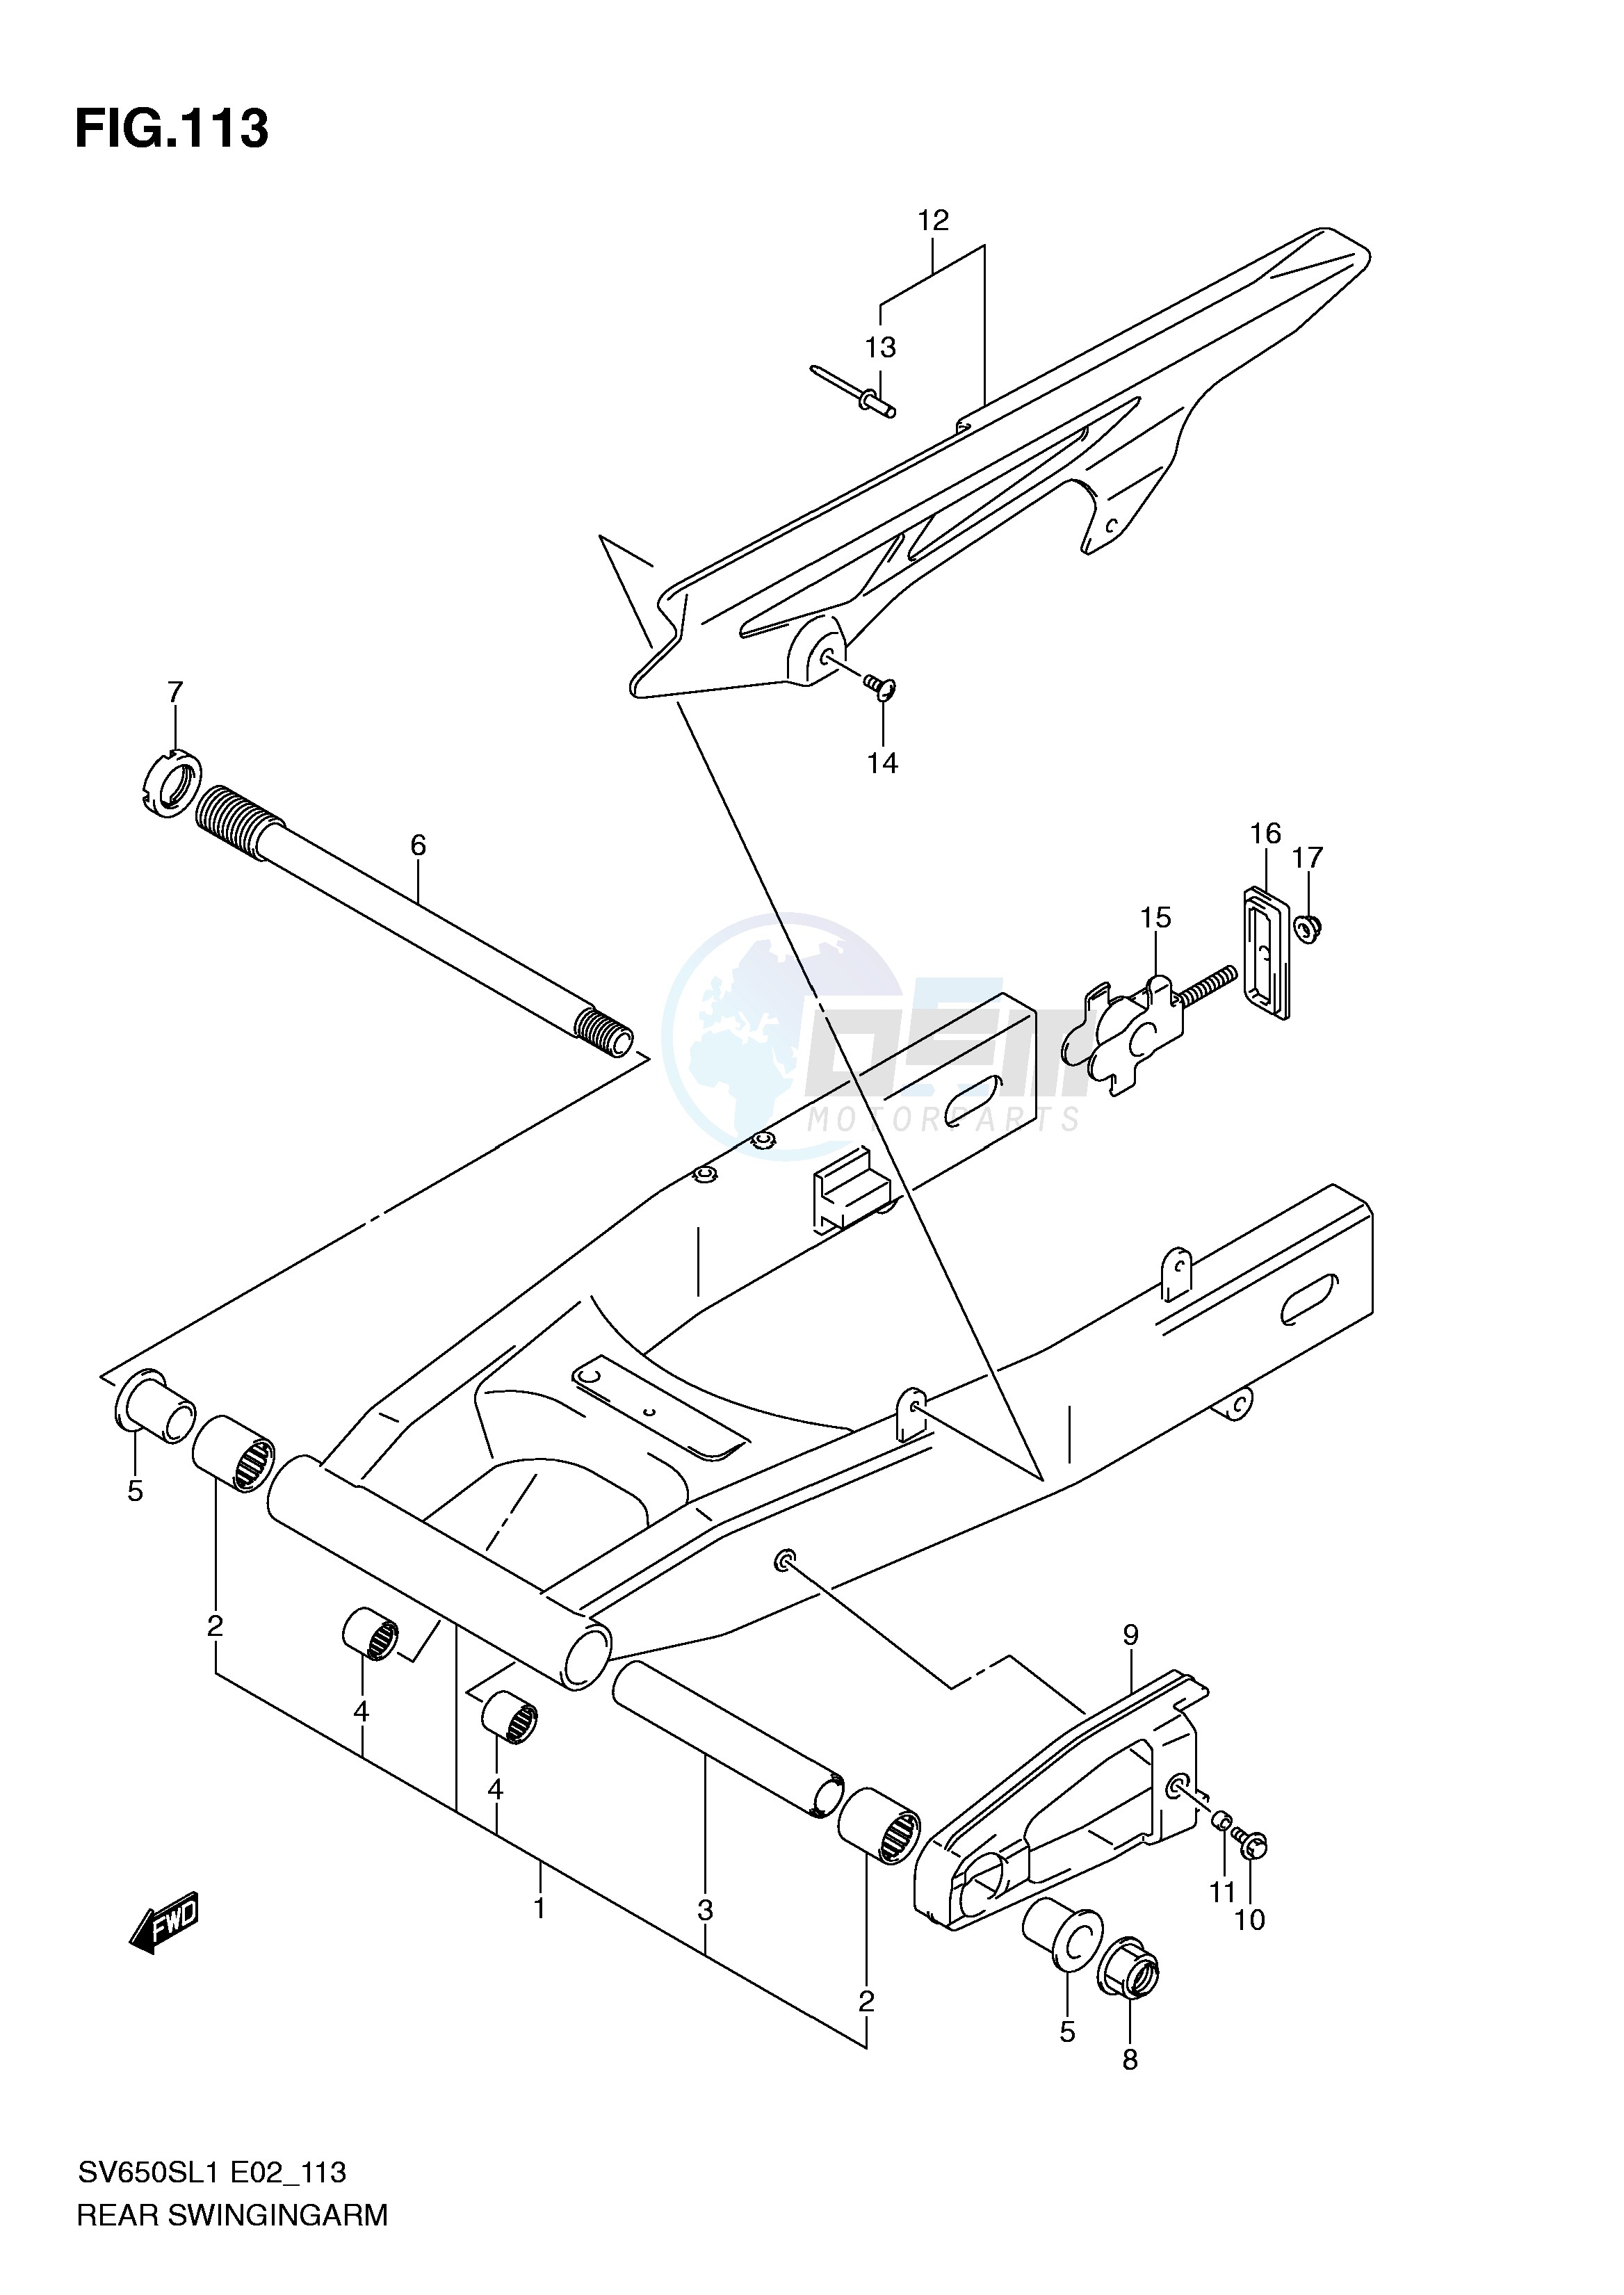 REAR SWINGING ARM (SV650SUL1 E24) blueprint